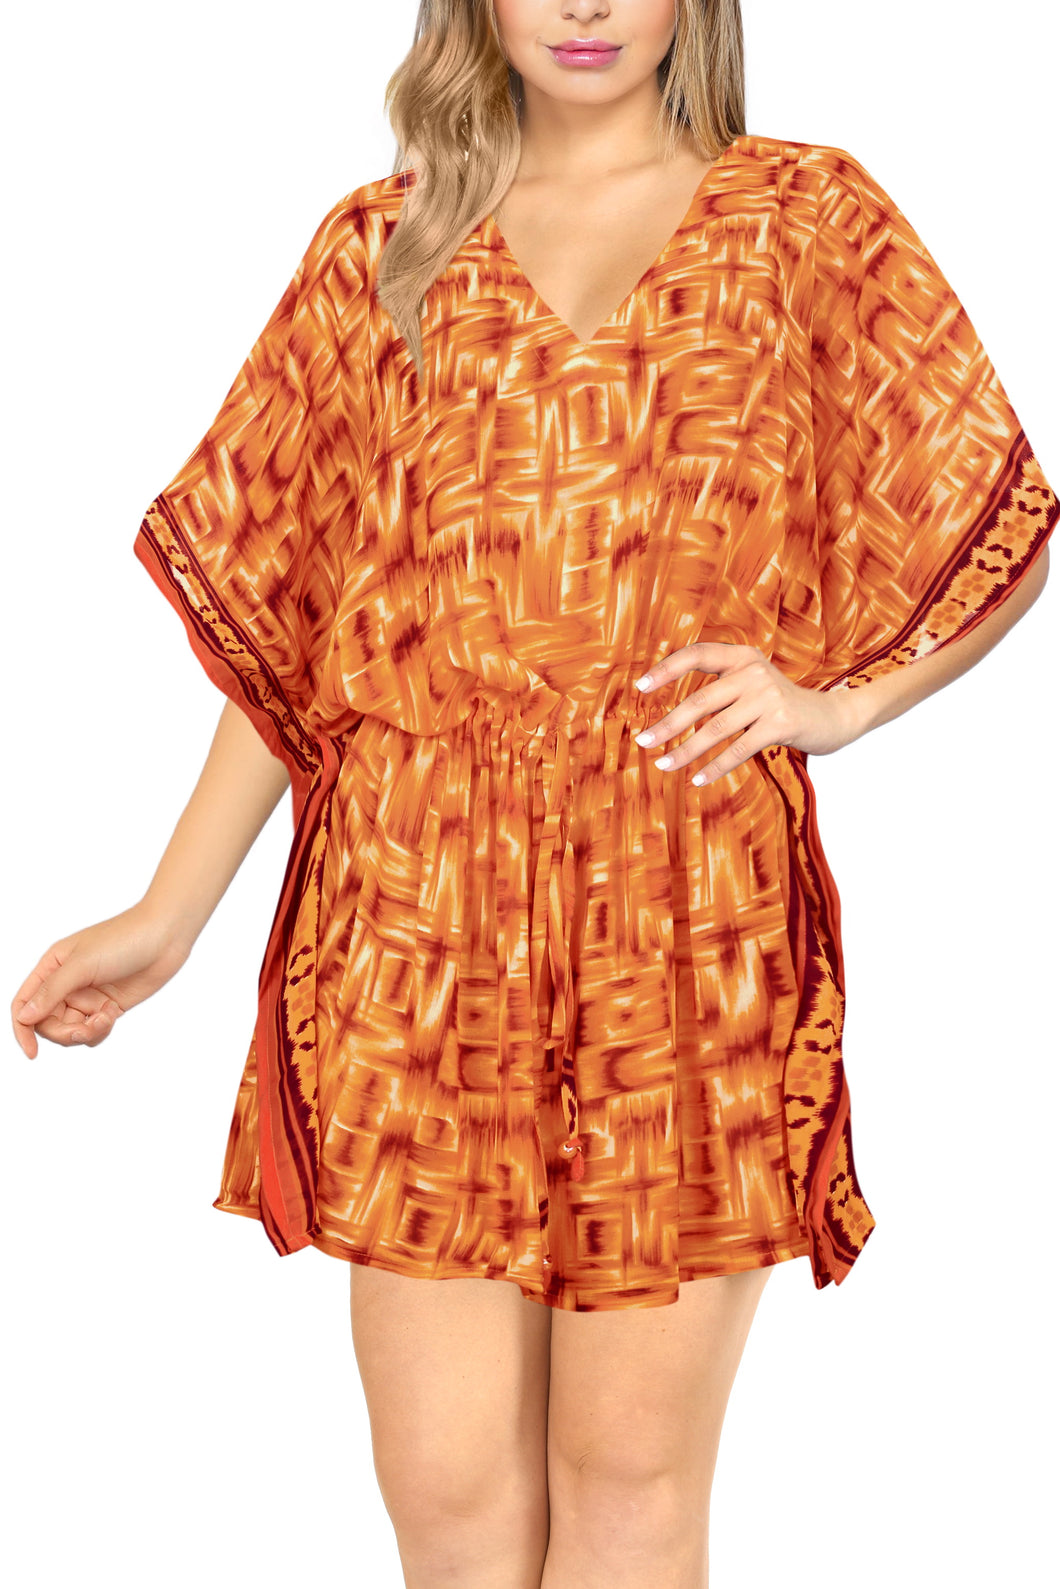 LA LEELA kimono cover ups for swimwear women Orange_Y315 OSFM 16-28W [XL- 4X]